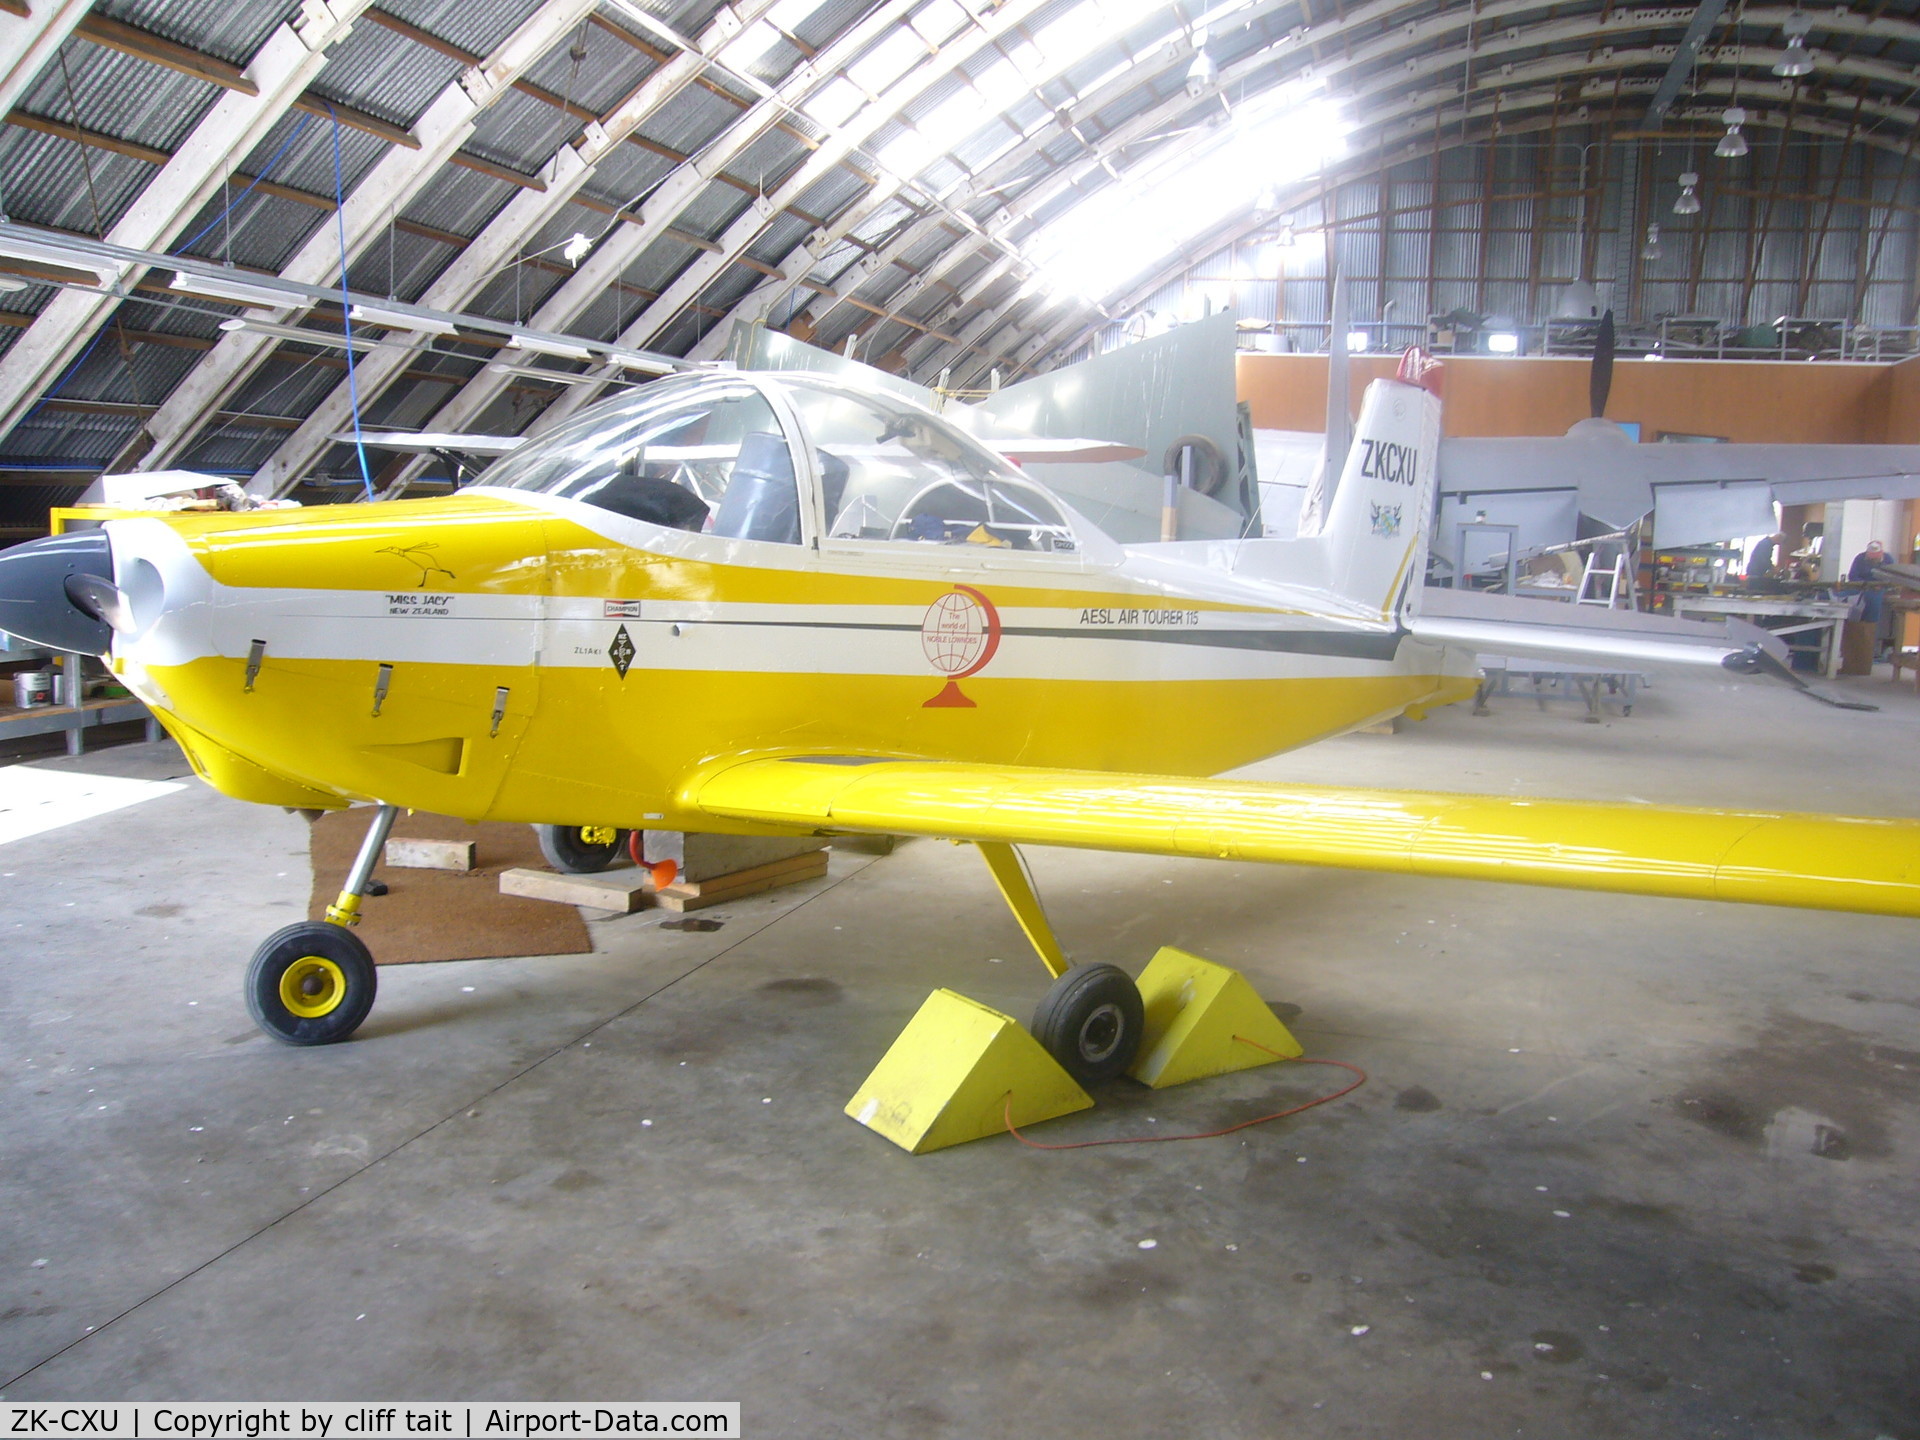 ZK-CXU, Victa Airtourer 115 C/N 521, my aircraft during restoration at motat